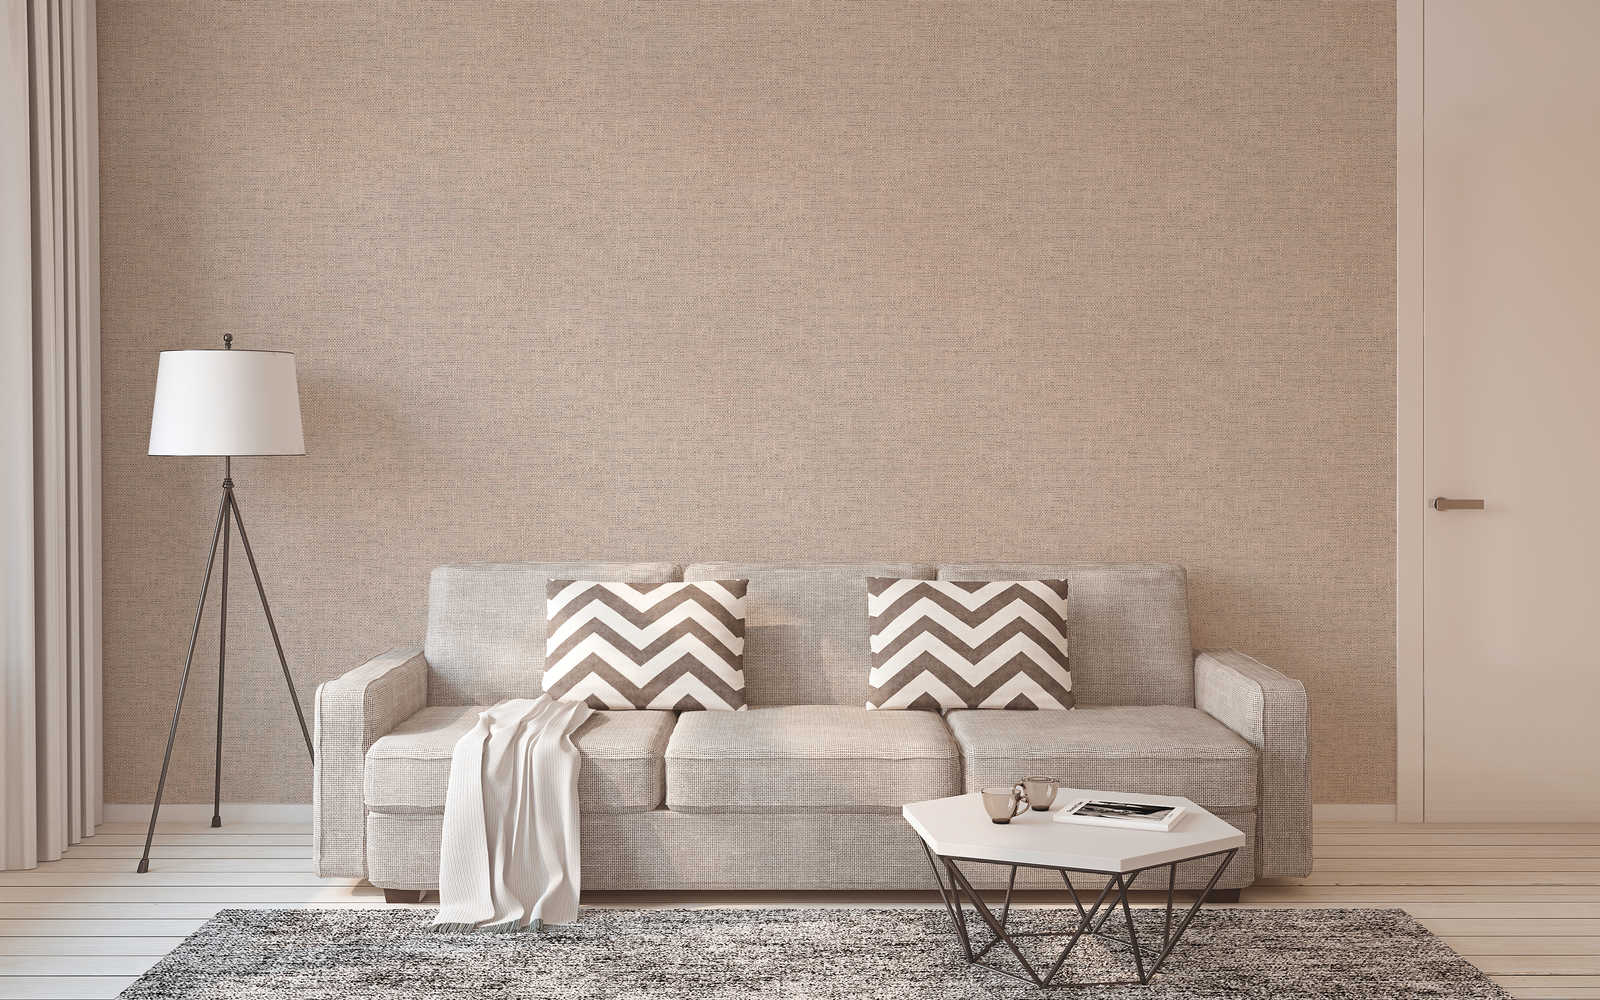             Linen look wallpaper coarse burlap - Brown, White
        